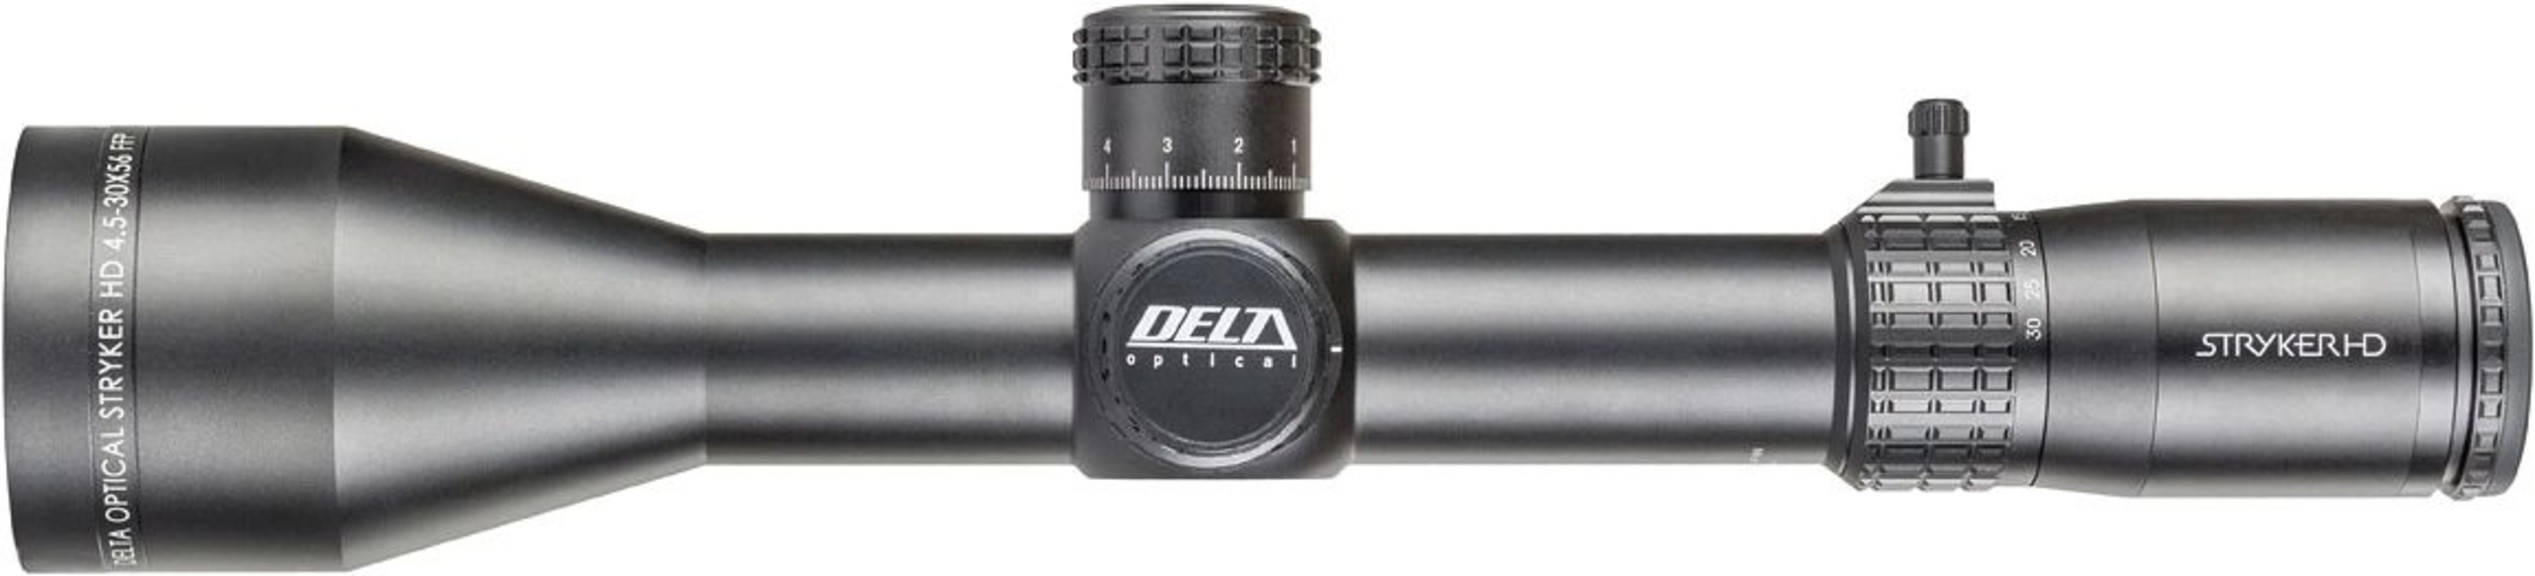 Прицел оптический Delta Stryker 4,5-30x56 FFP DLR-1 2020